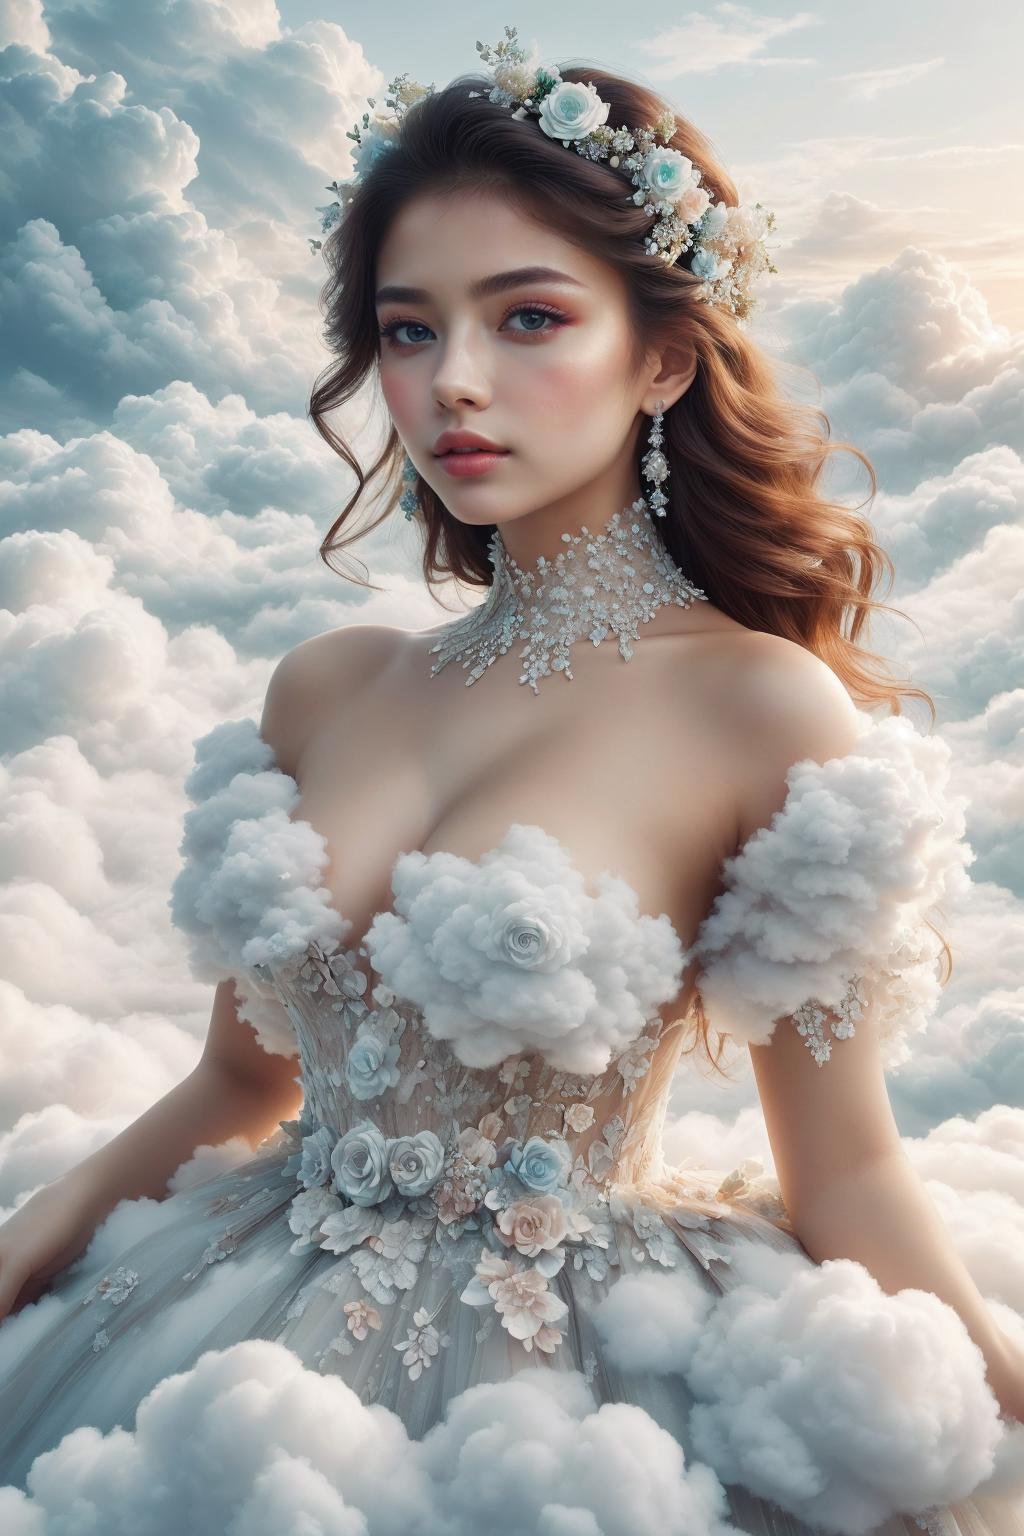 ((Masterpiece, best quality,edgQuality)), edgCloud, a woman wearing a dress made of clouds ,wearing edgCloud <lora:edgCloudDress:0.8>